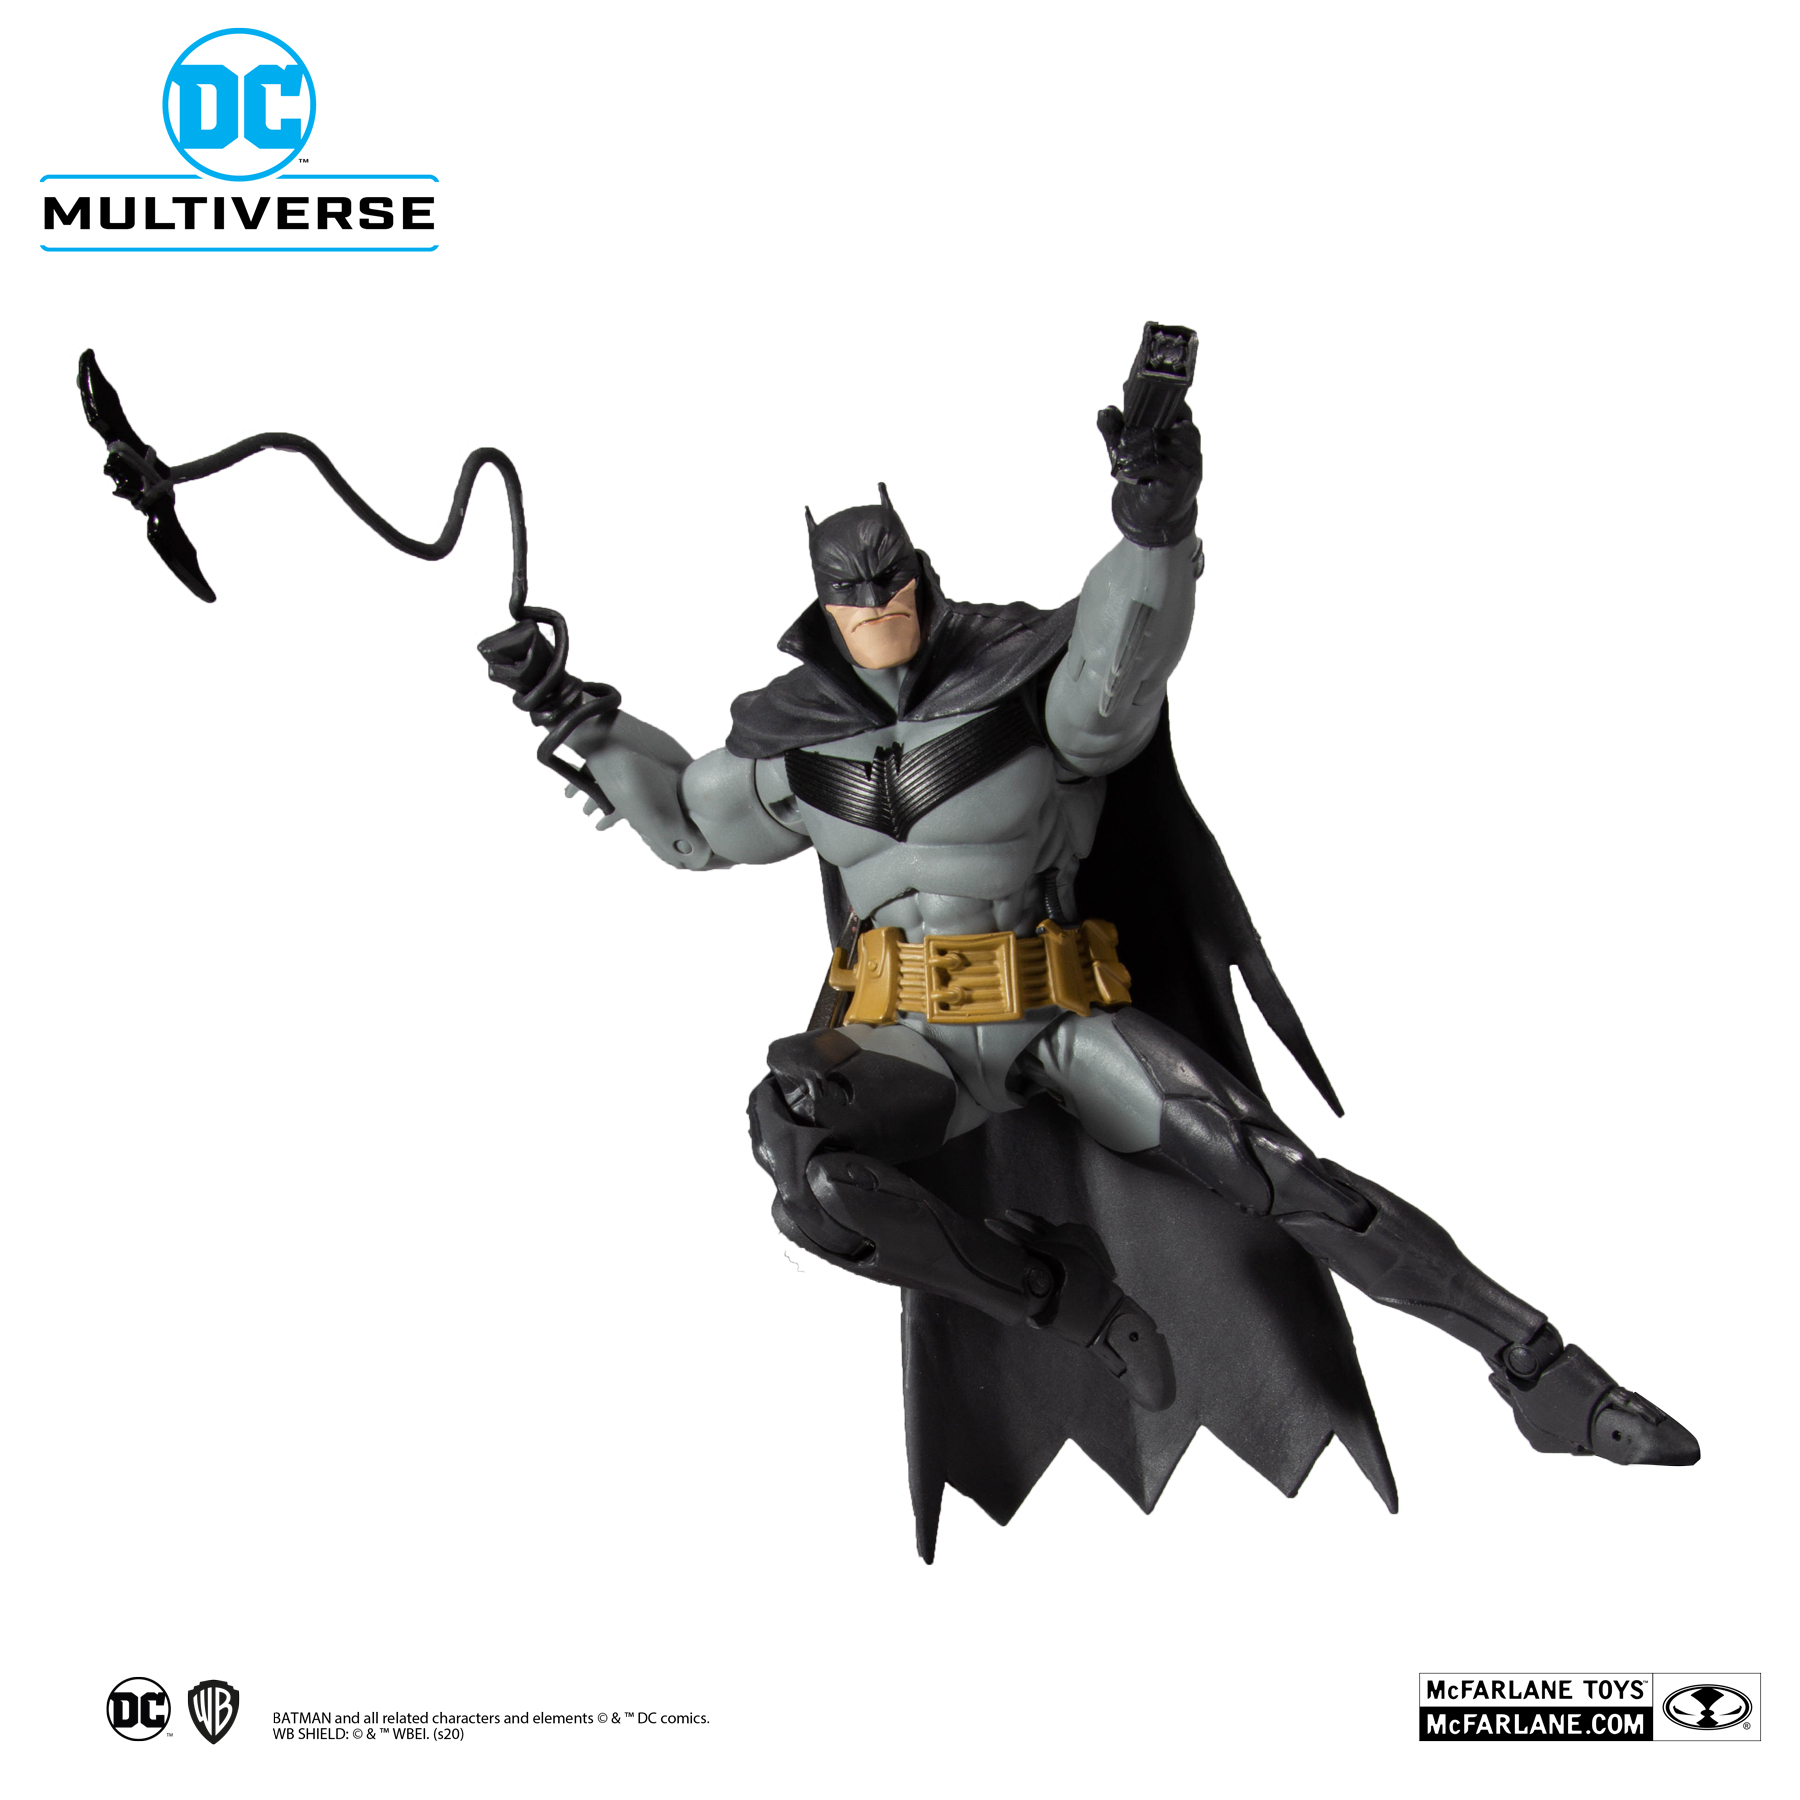 White Knight 7 Inch Action Figure 15406-1 for sale online McFarlane Toys DC Multiverse Batman 